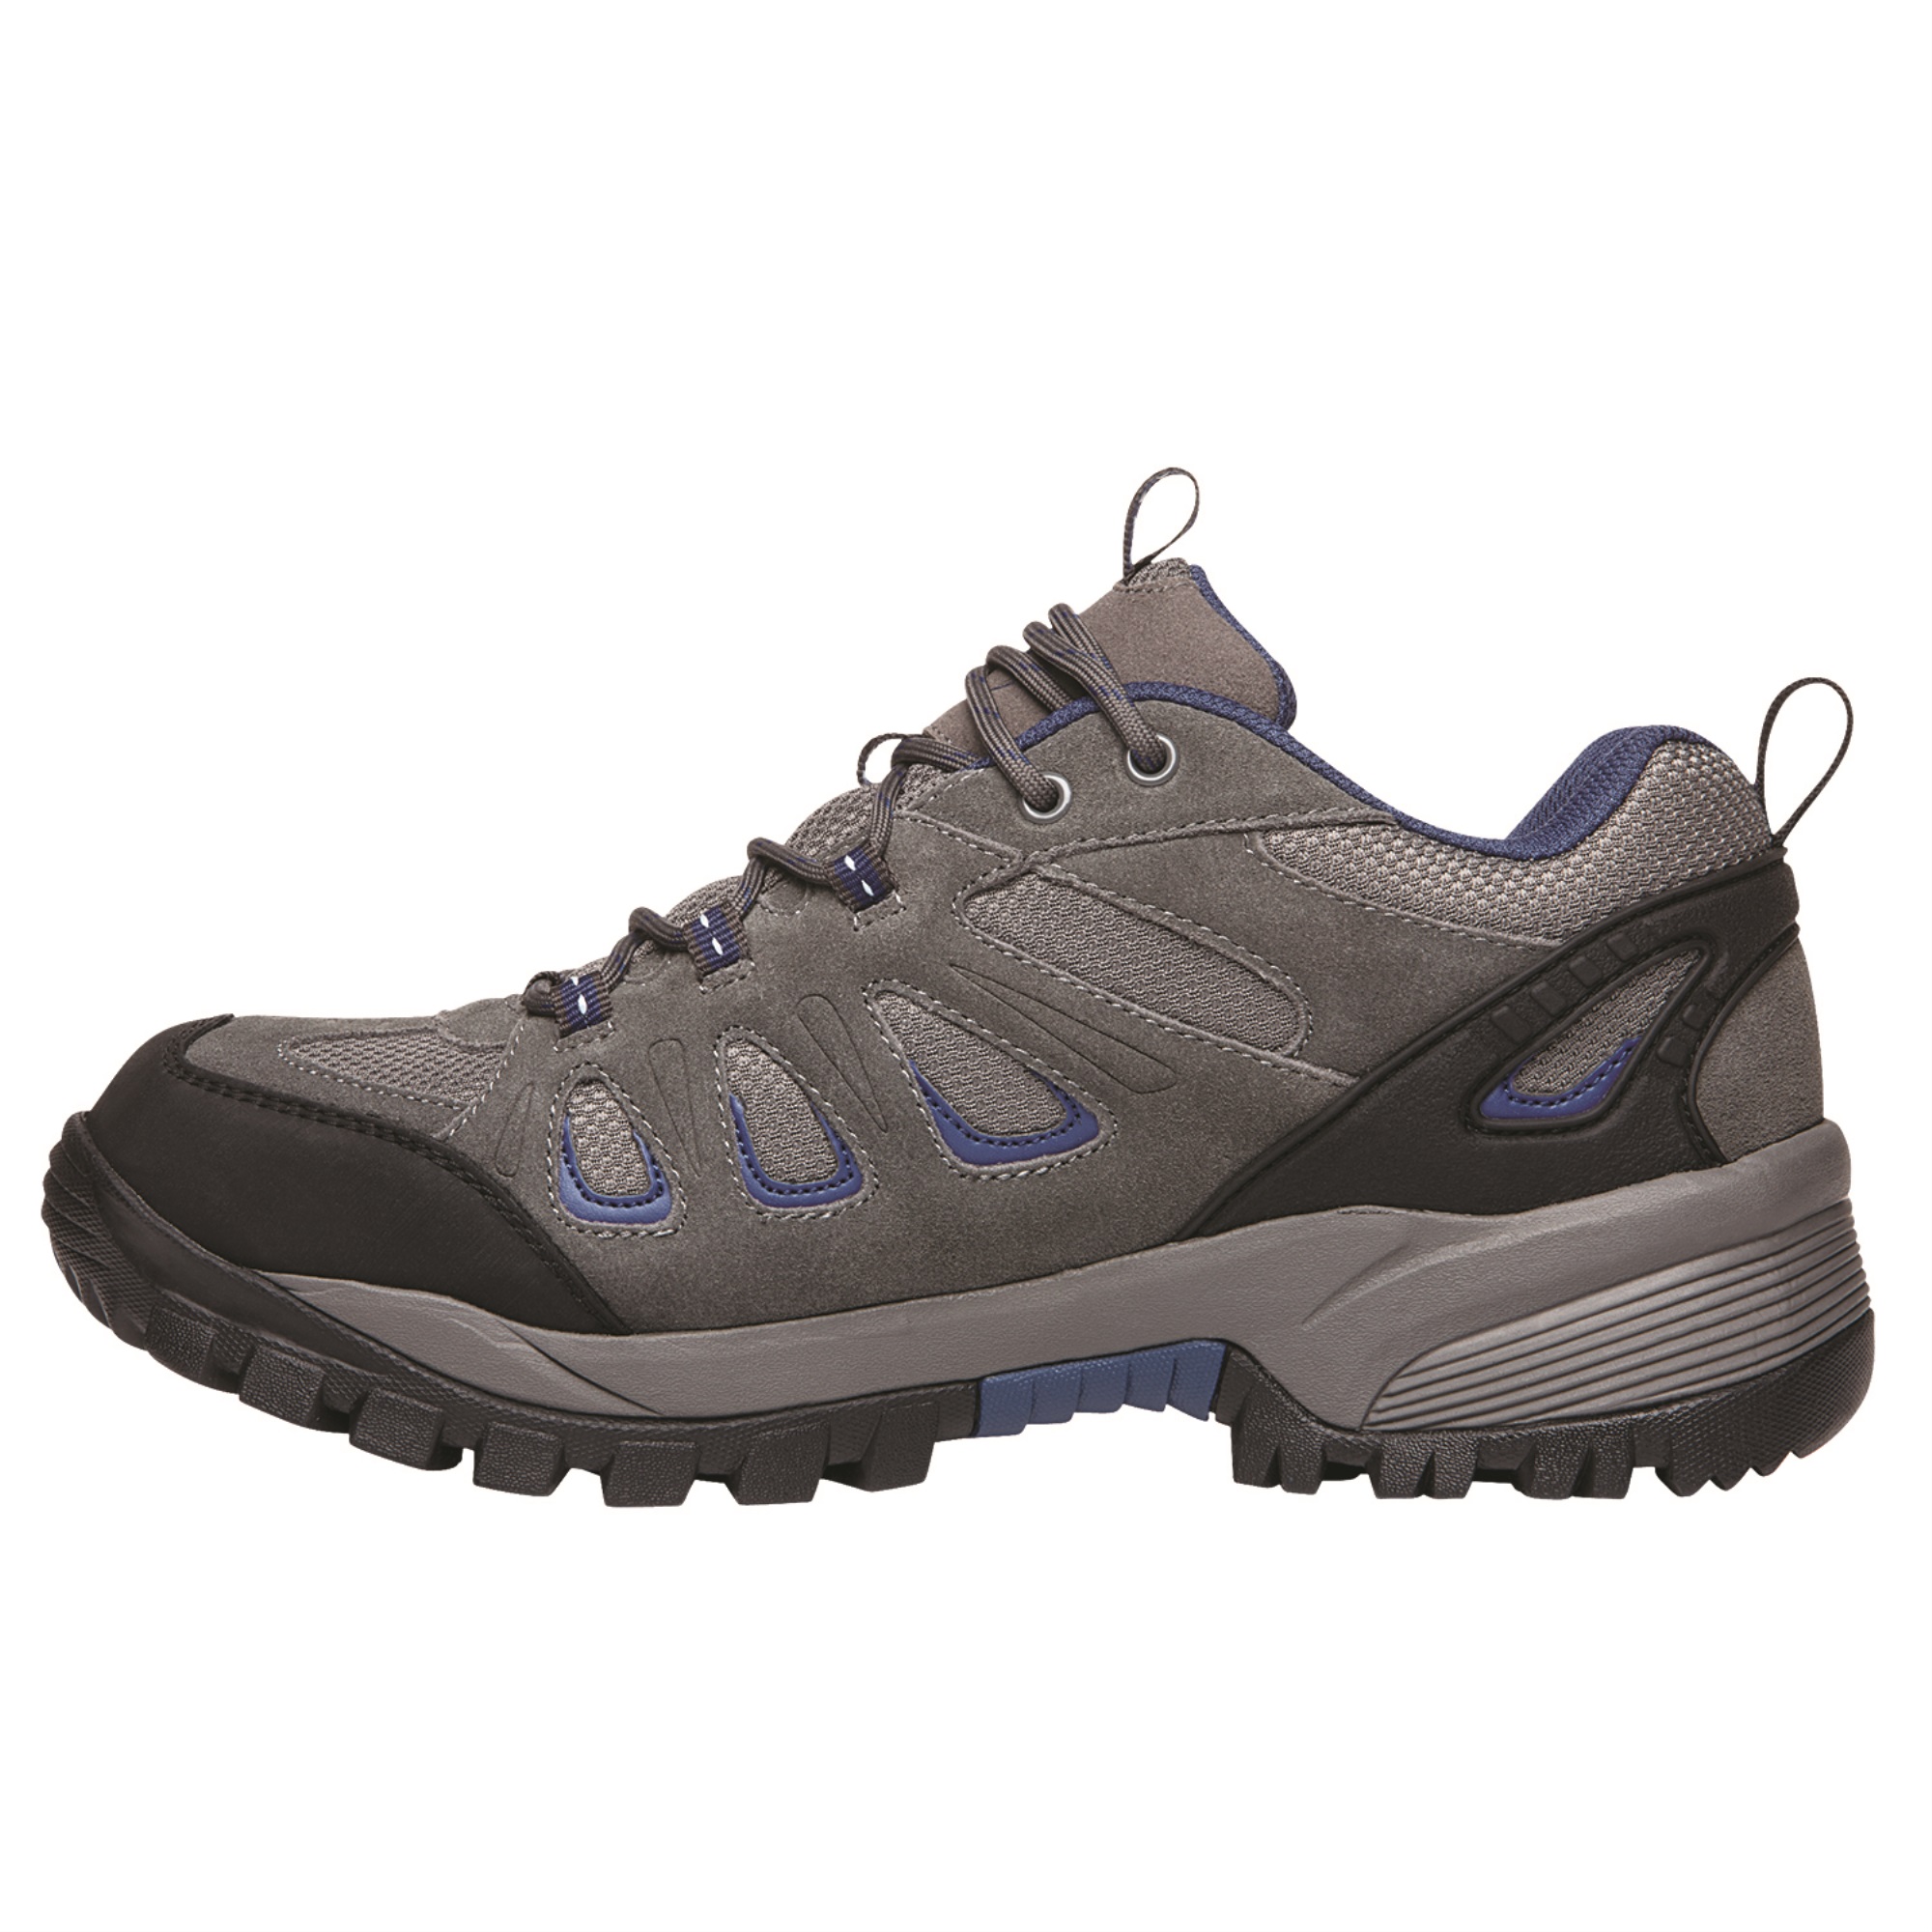 Men's Propet Ridge Walker Low Hiking Shoe - image 2 of 5